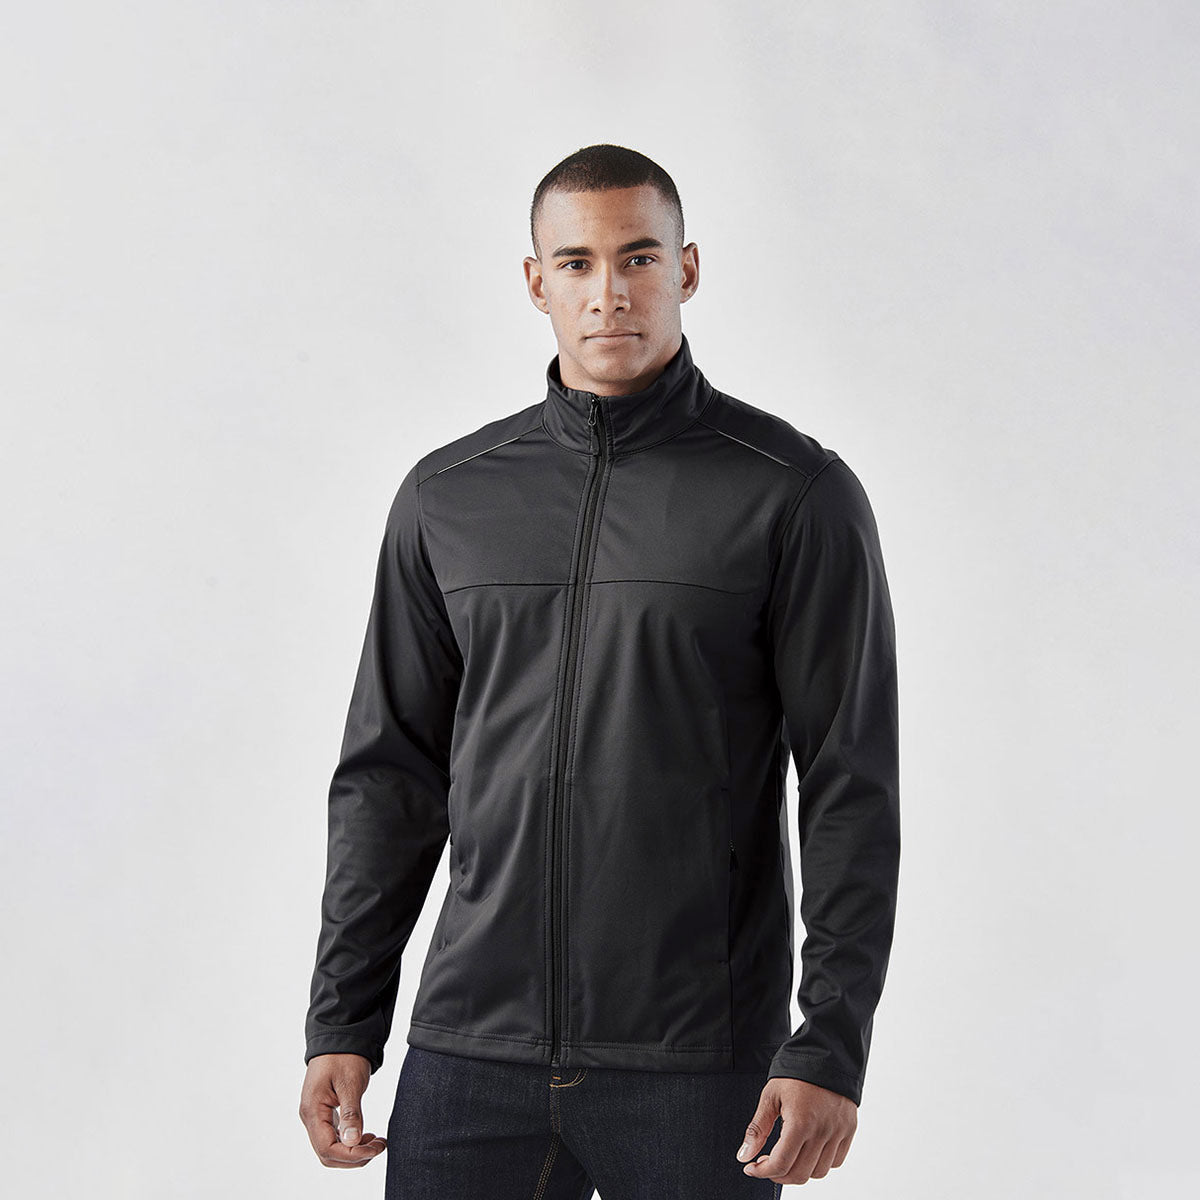 Men's Mistral Fleece Jacket - Stormtech Distributor